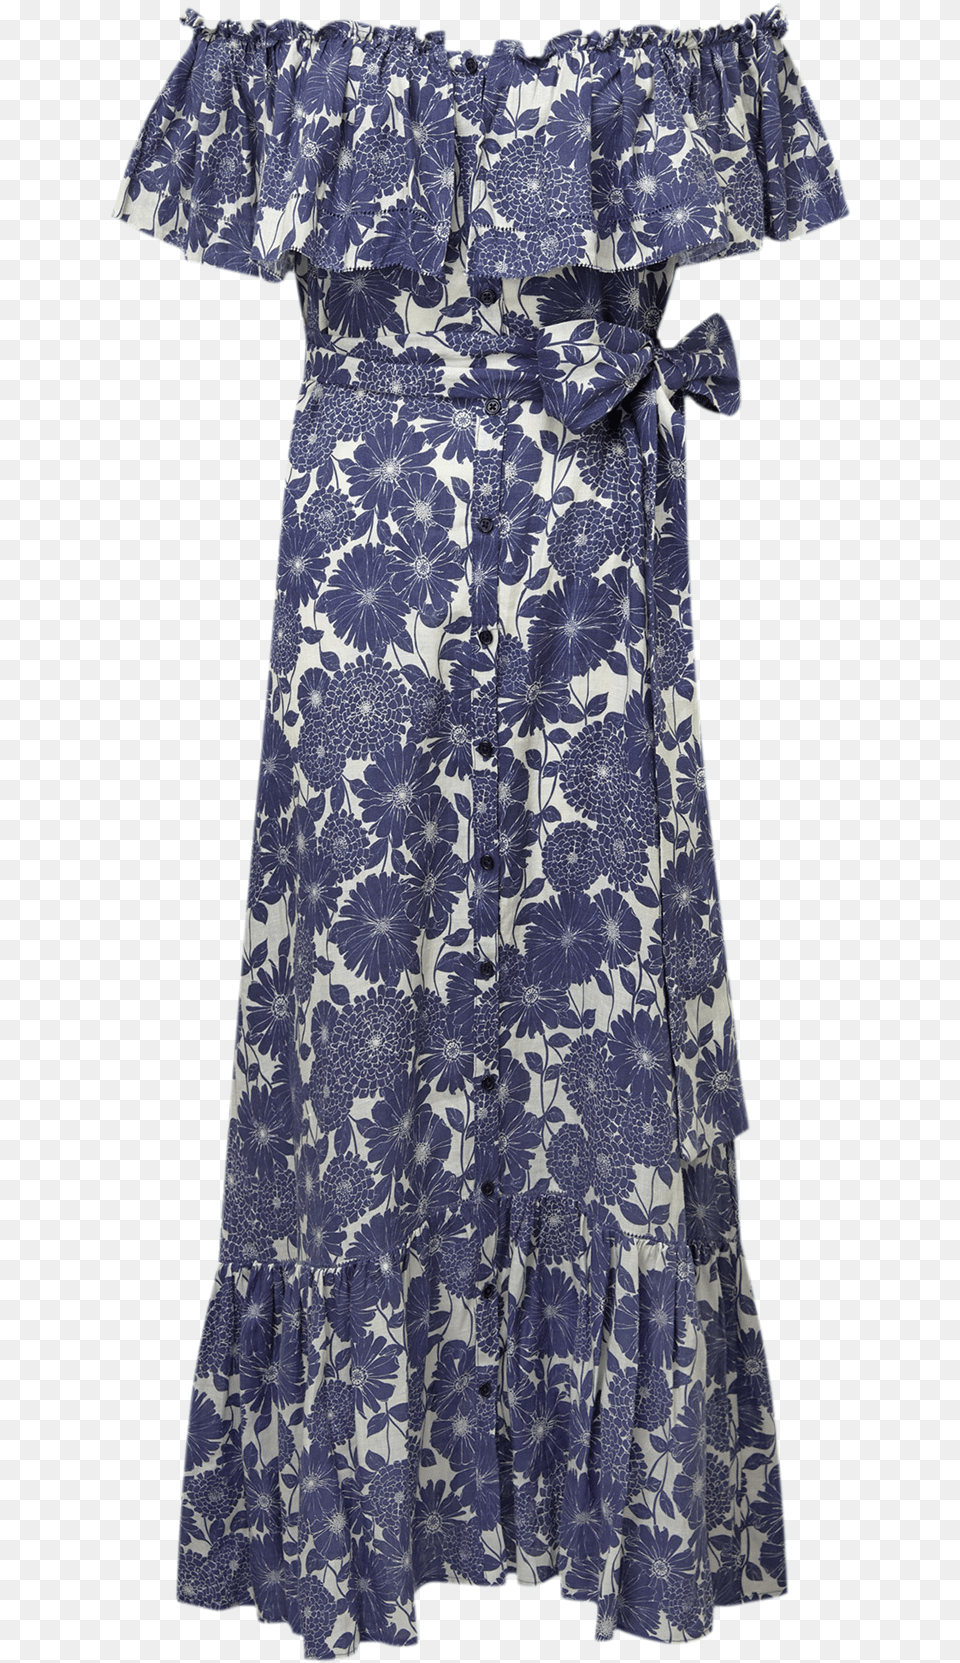 Mira Navy Floral Linen Dress Day Dress, Clothing, Skirt, Fashion, Robe Png